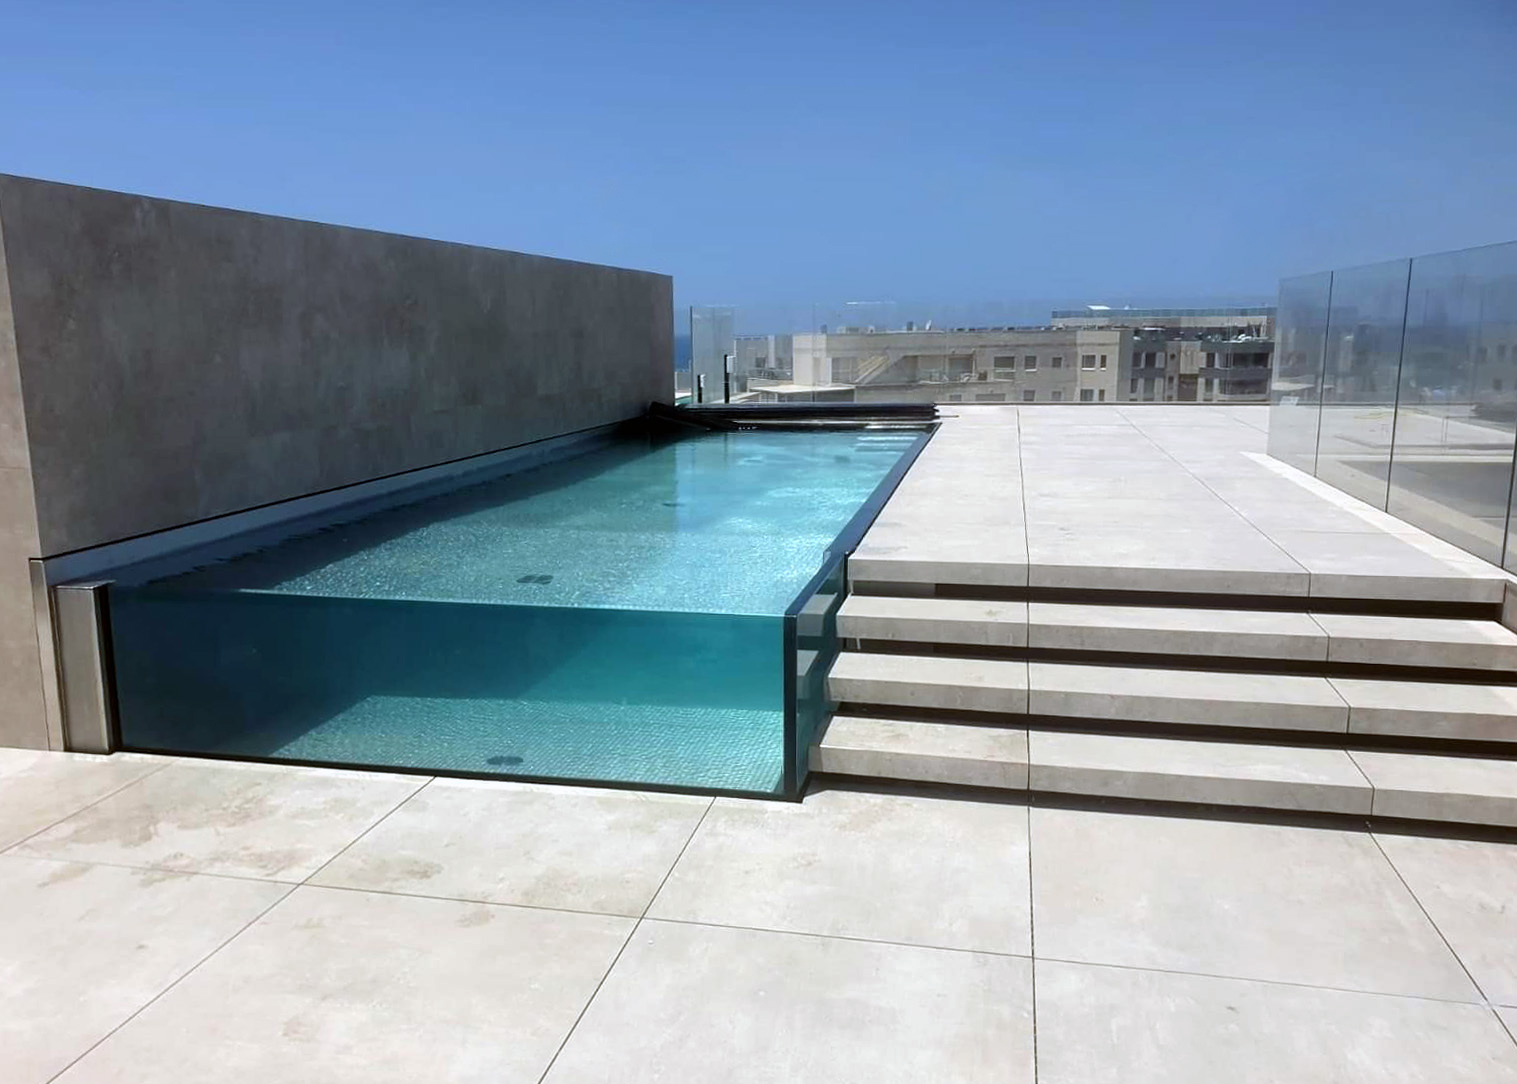 Luxury rooftop glass stainless steel pool IMAGINOX